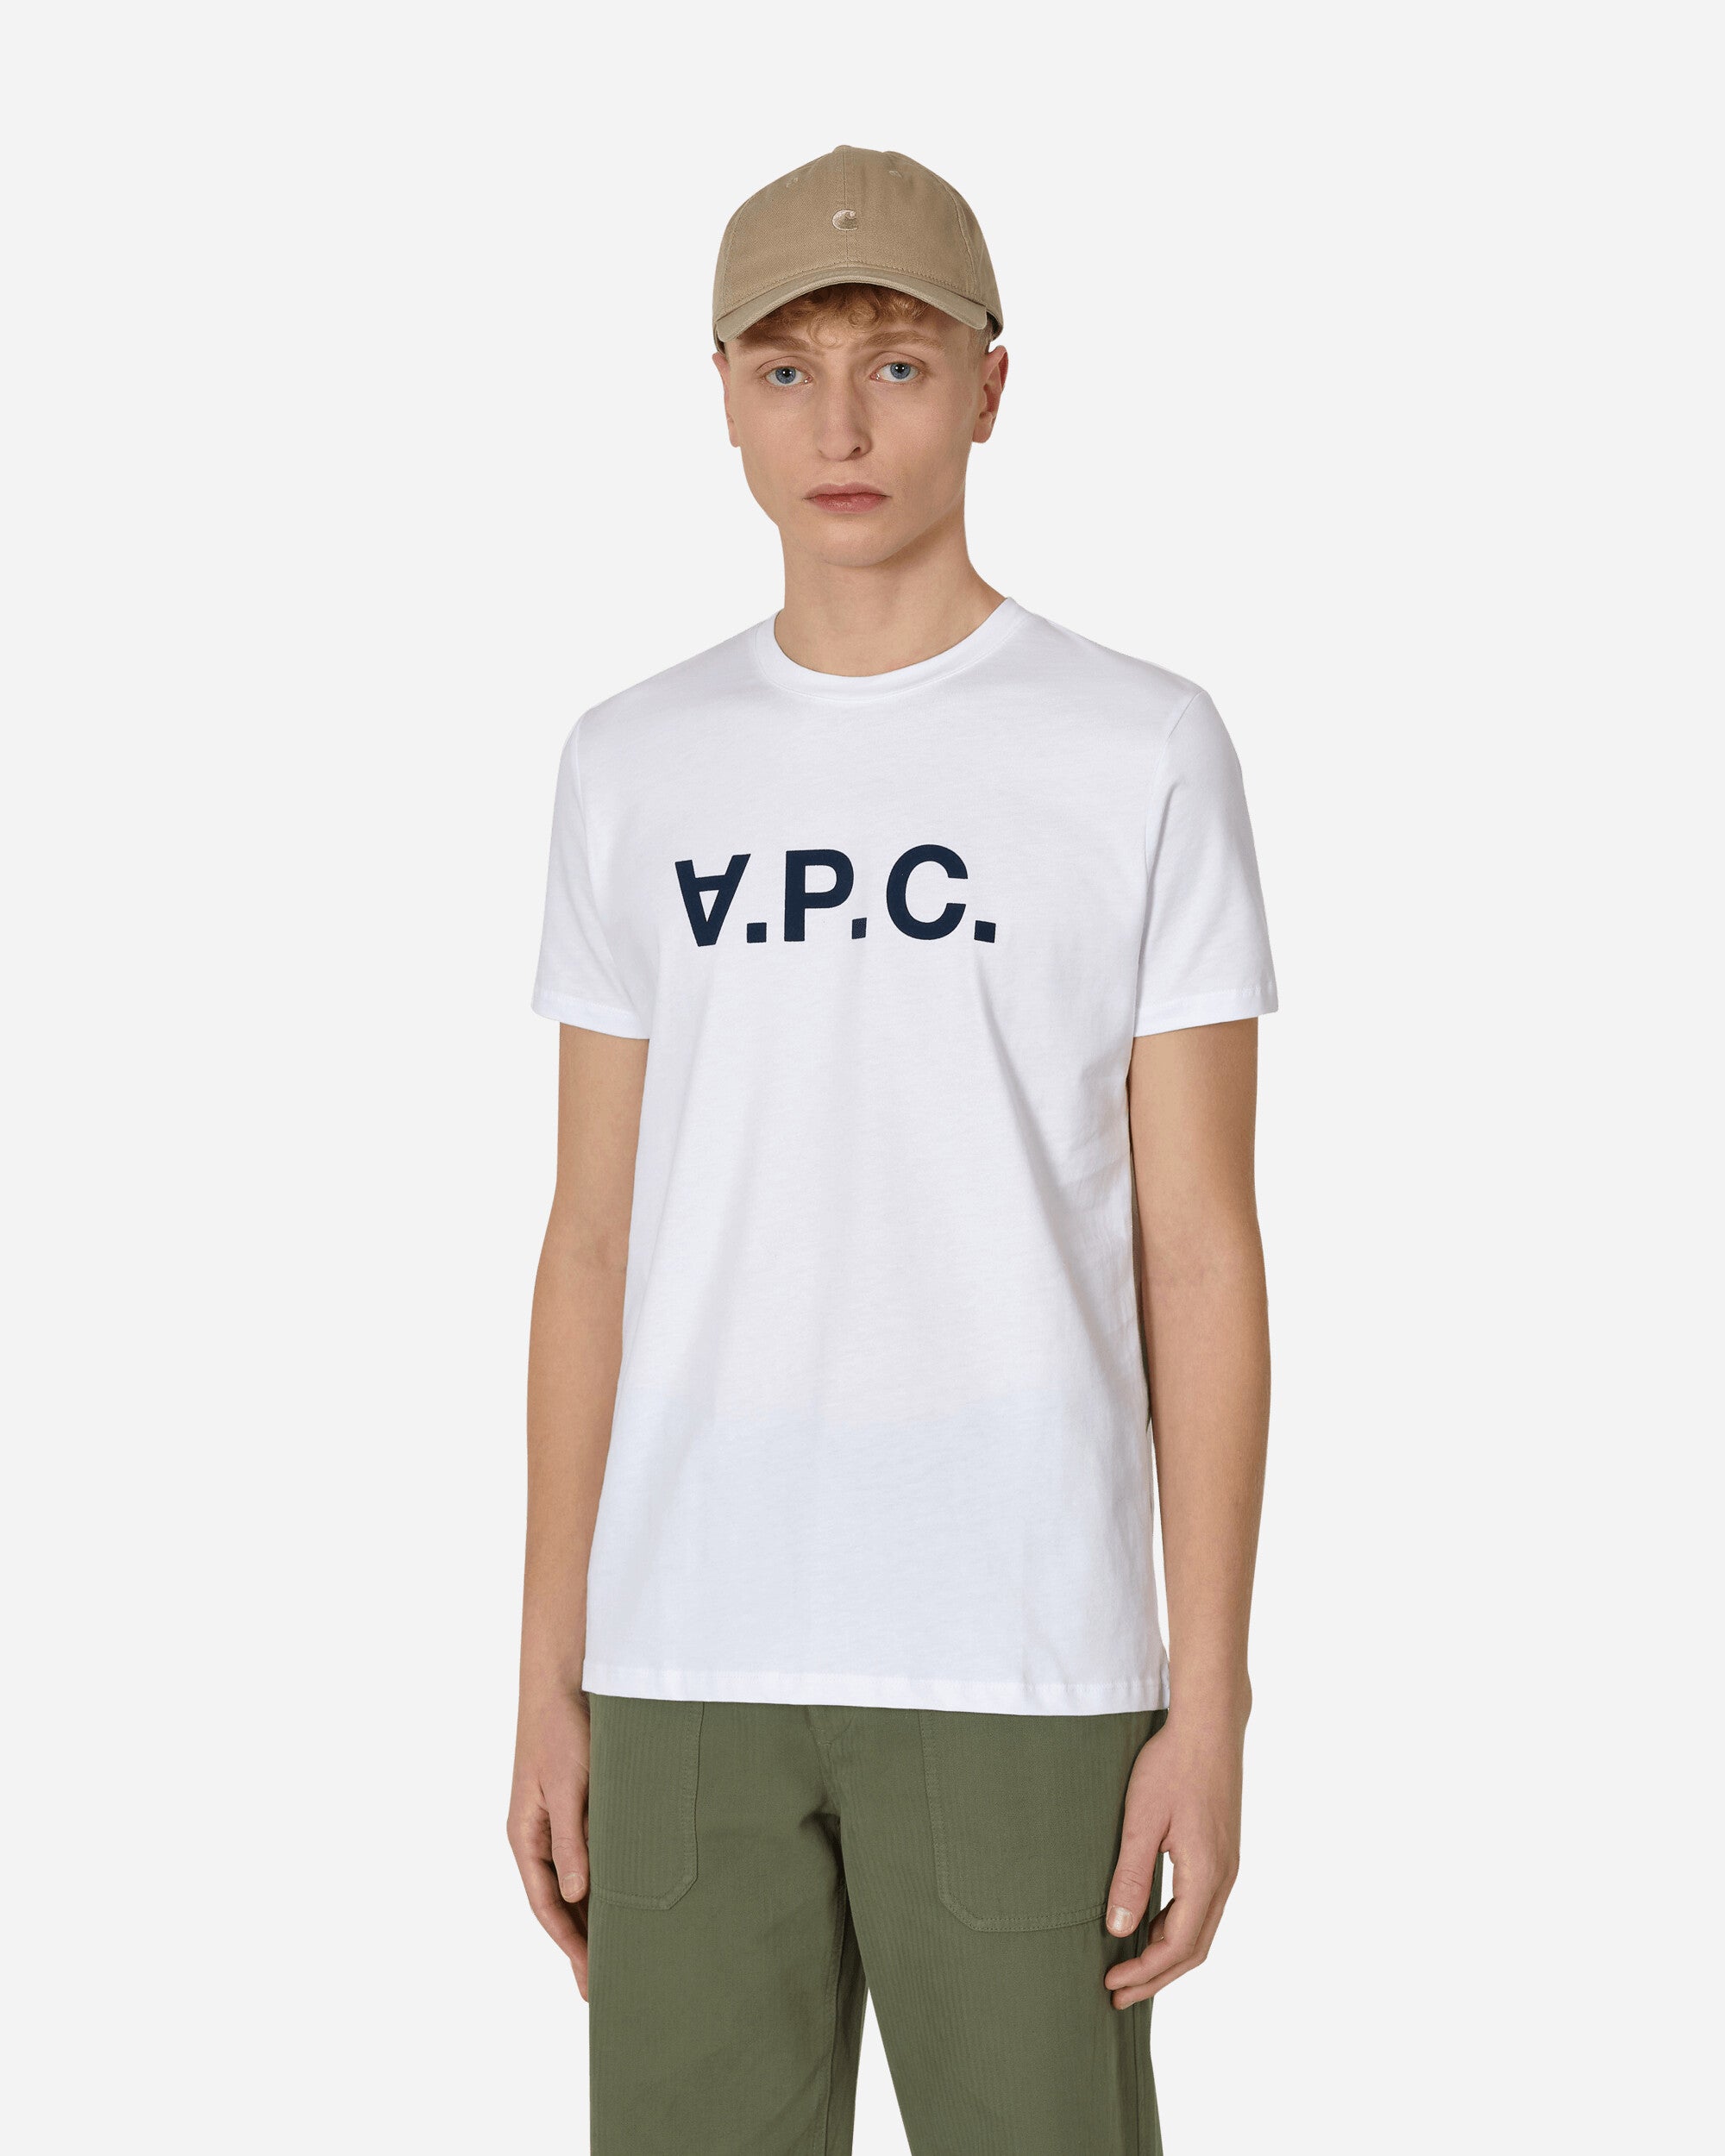 Pas på Genoplive Klassifikation A.P.C. VPC T-Shirt White - Slam Jam Official Store